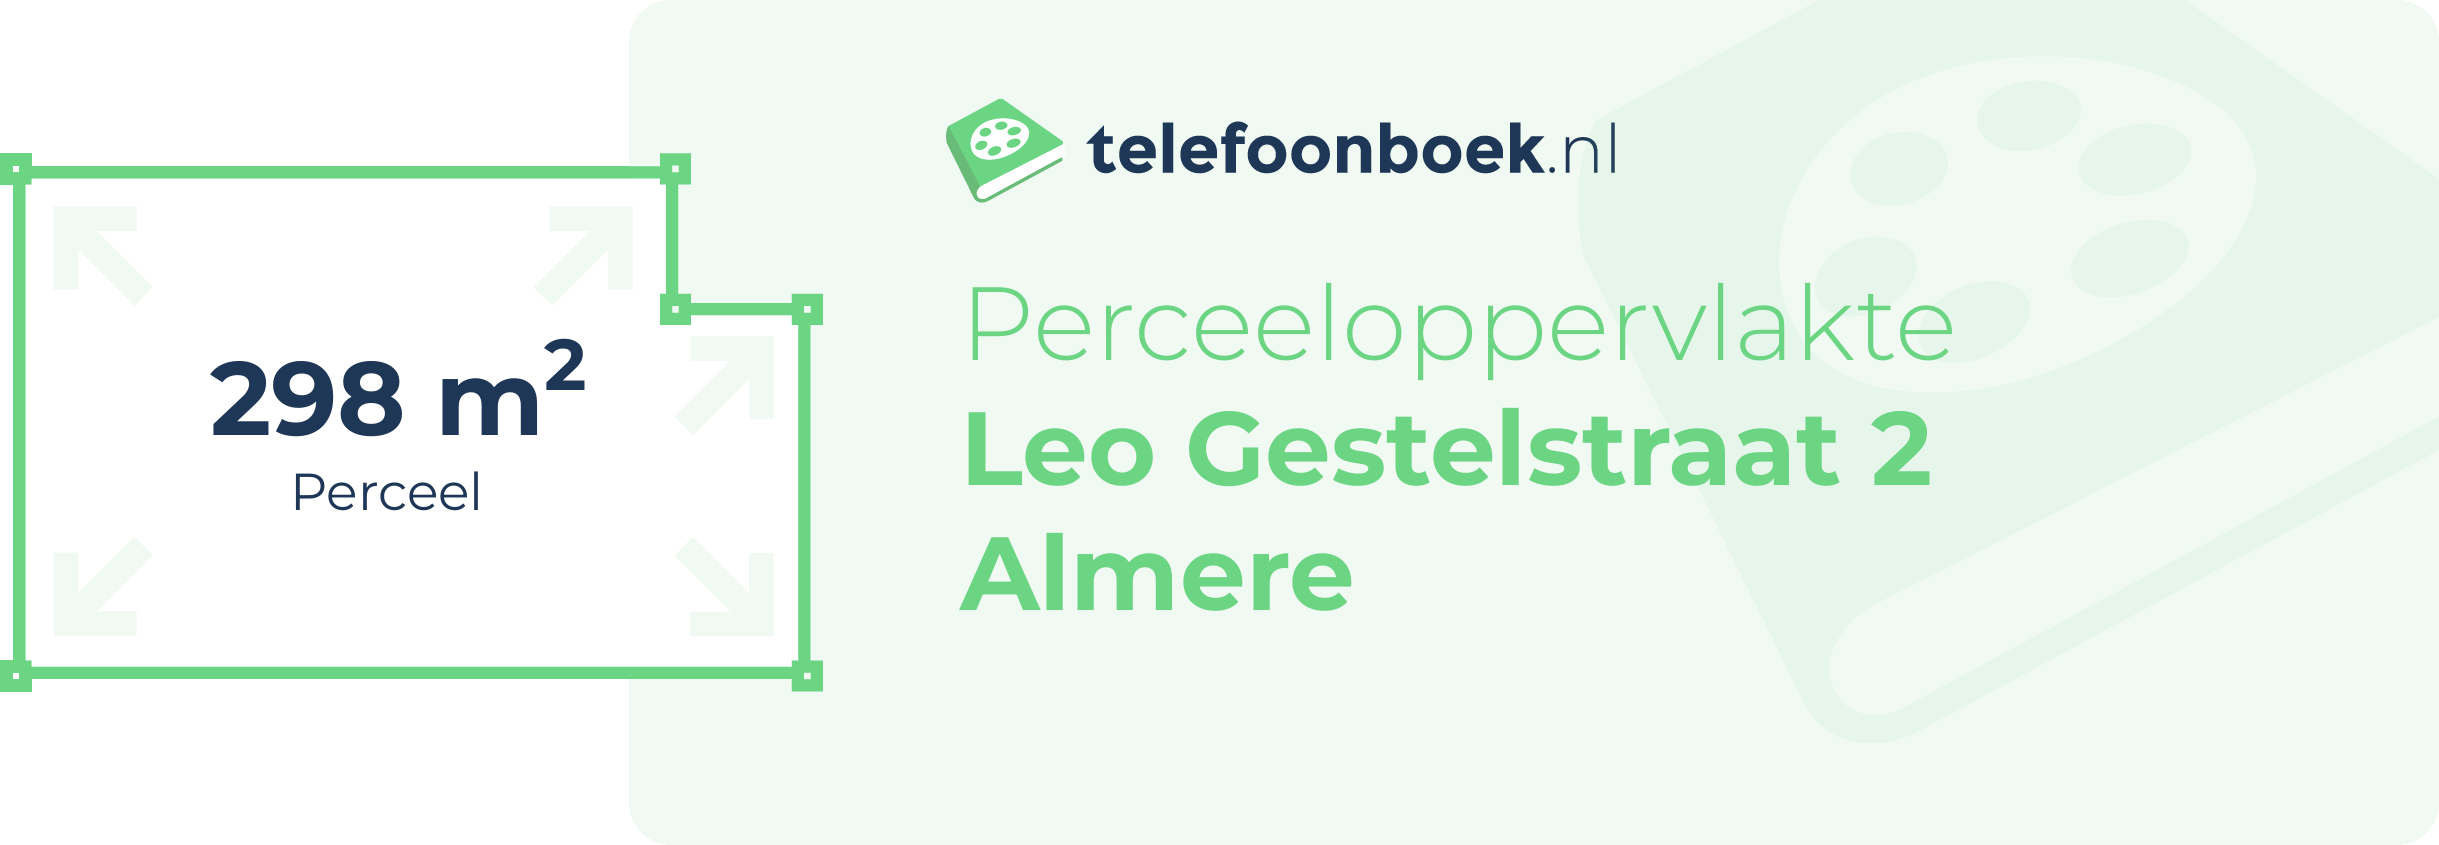 Perceeloppervlakte Leo Gestelstraat 2 Almere